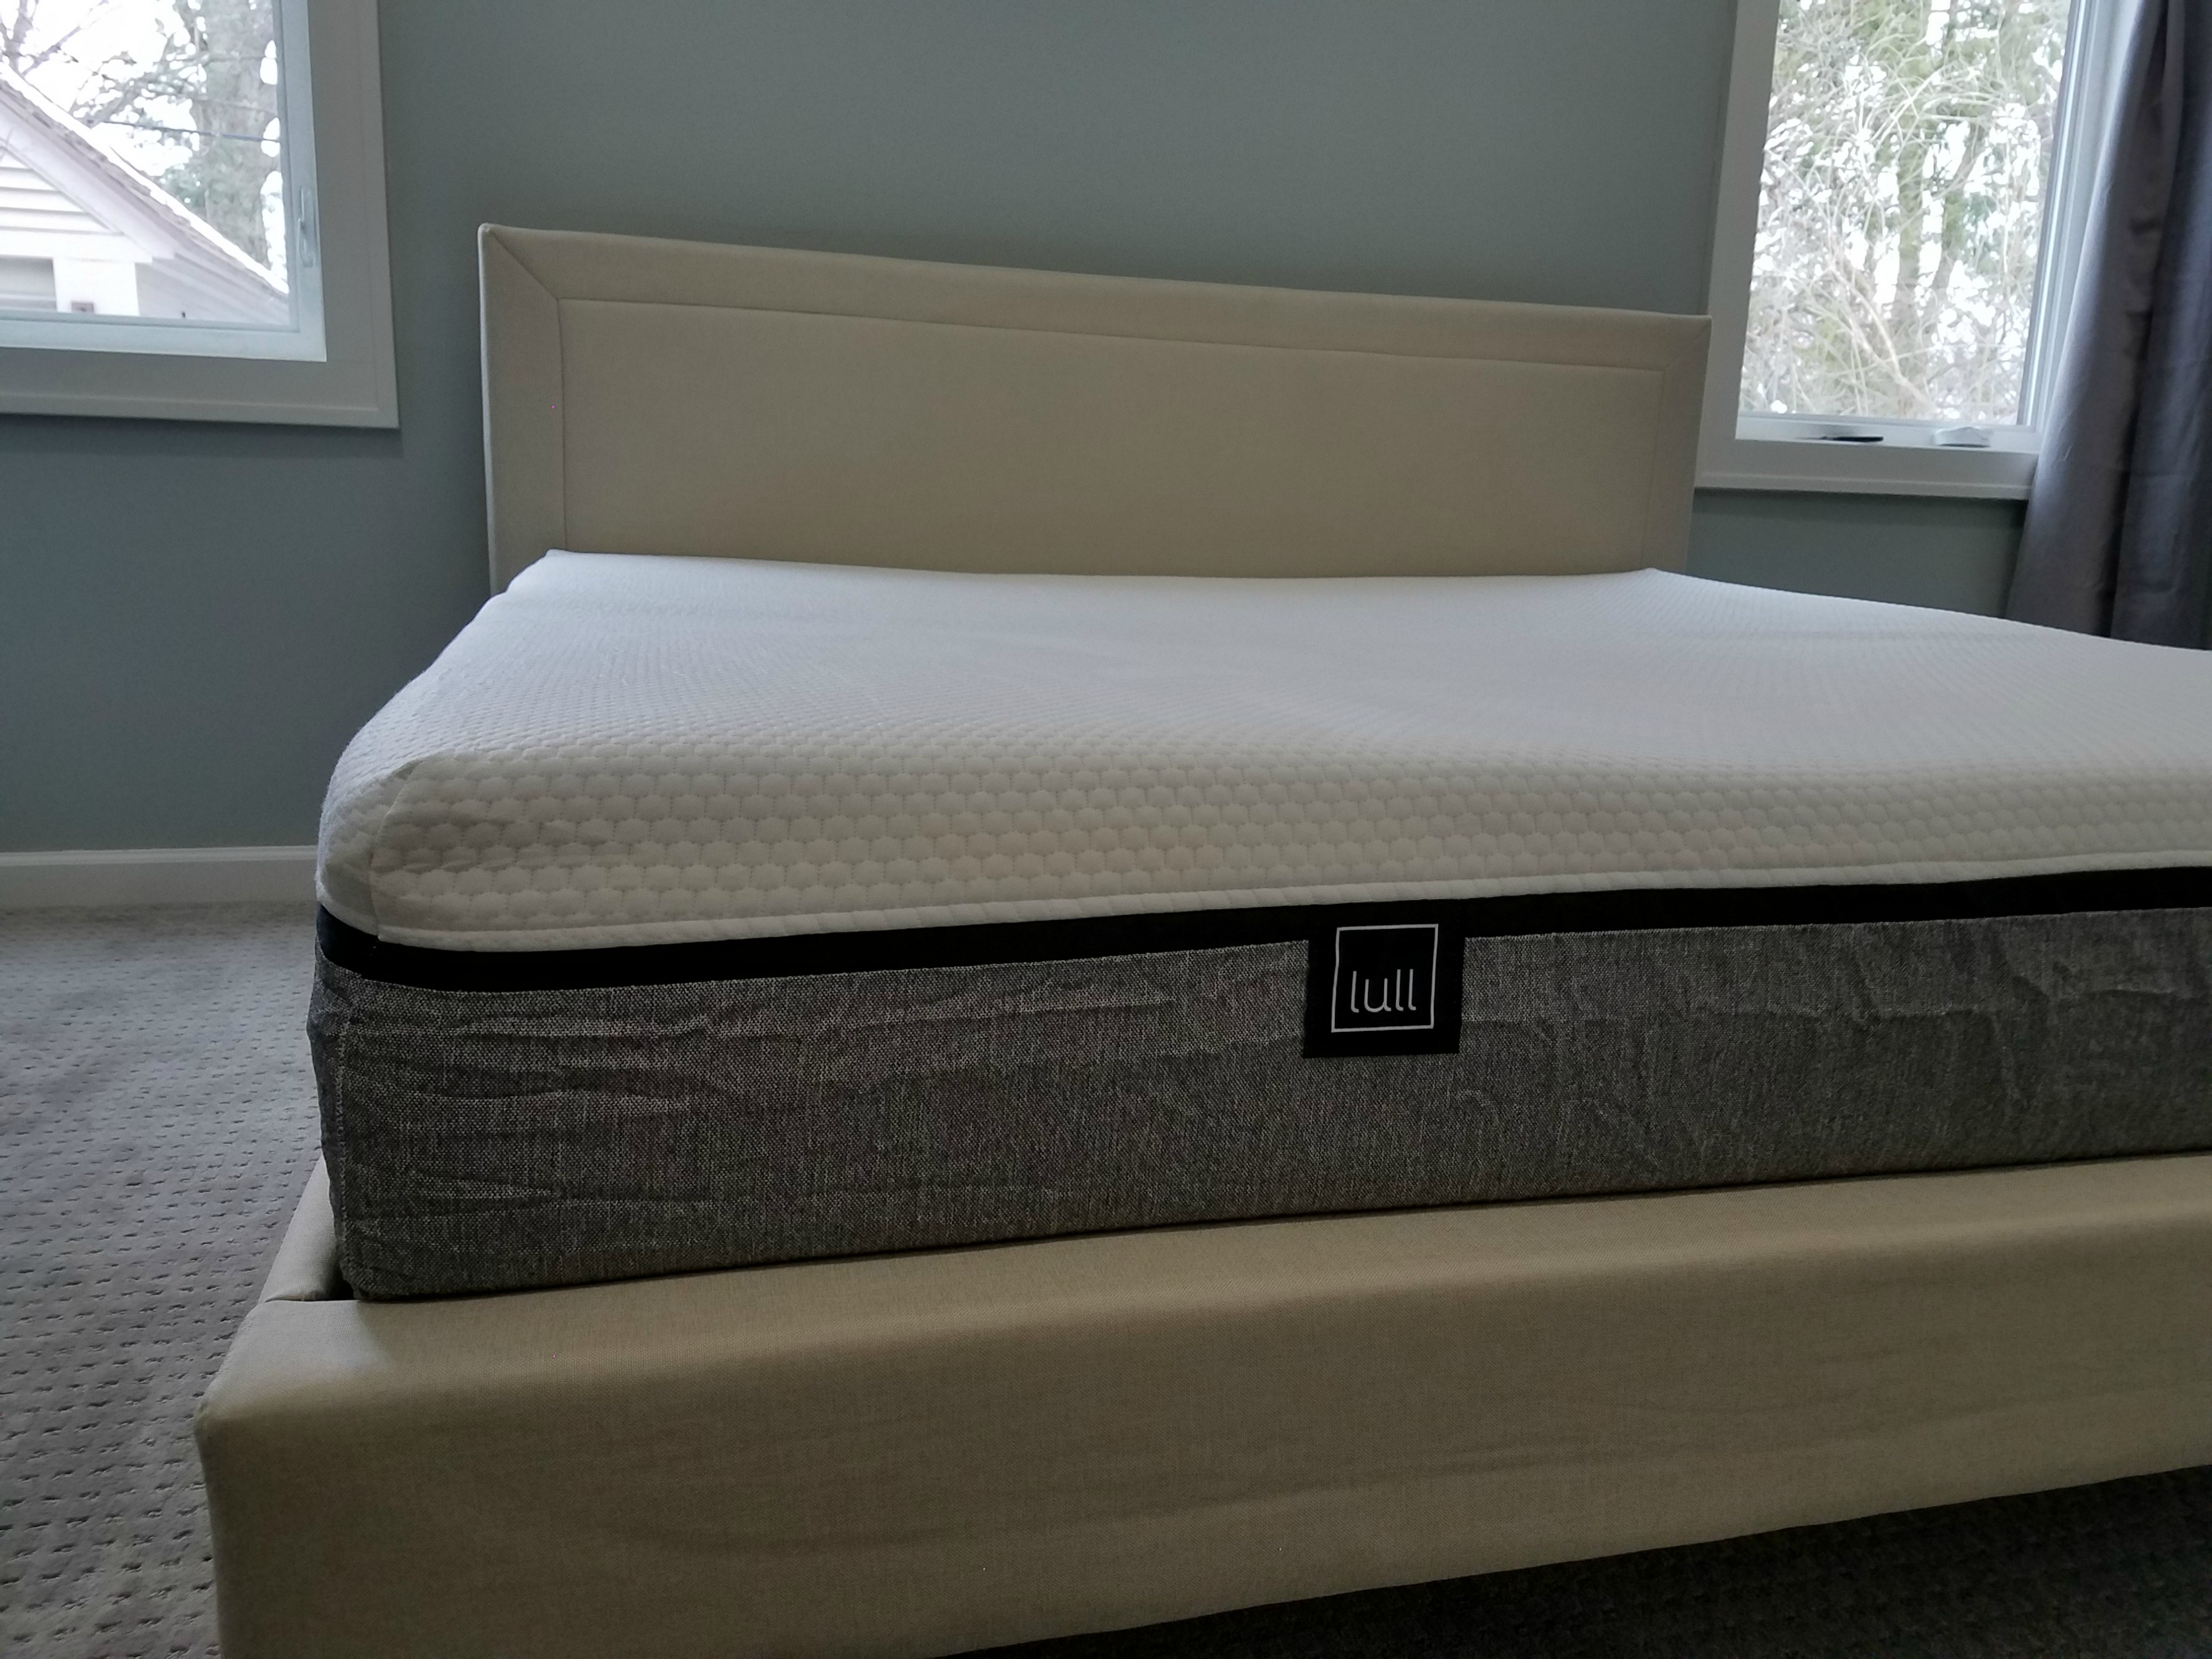 lull mattress for sale